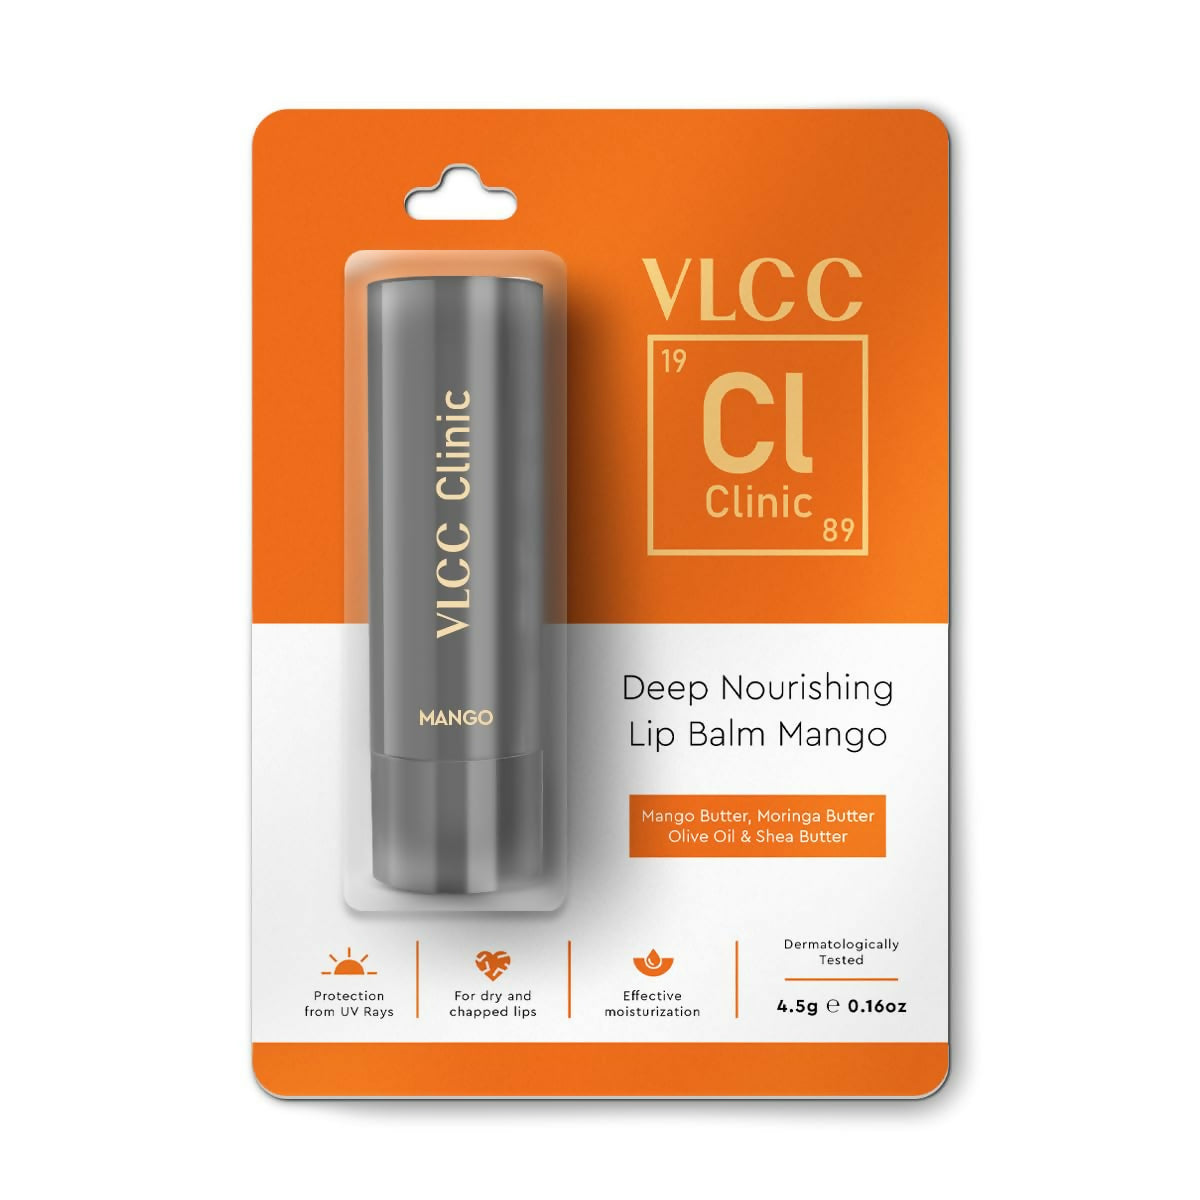 VLCC Clinic Deep Nourishing Lip Balm Mango & Moringa